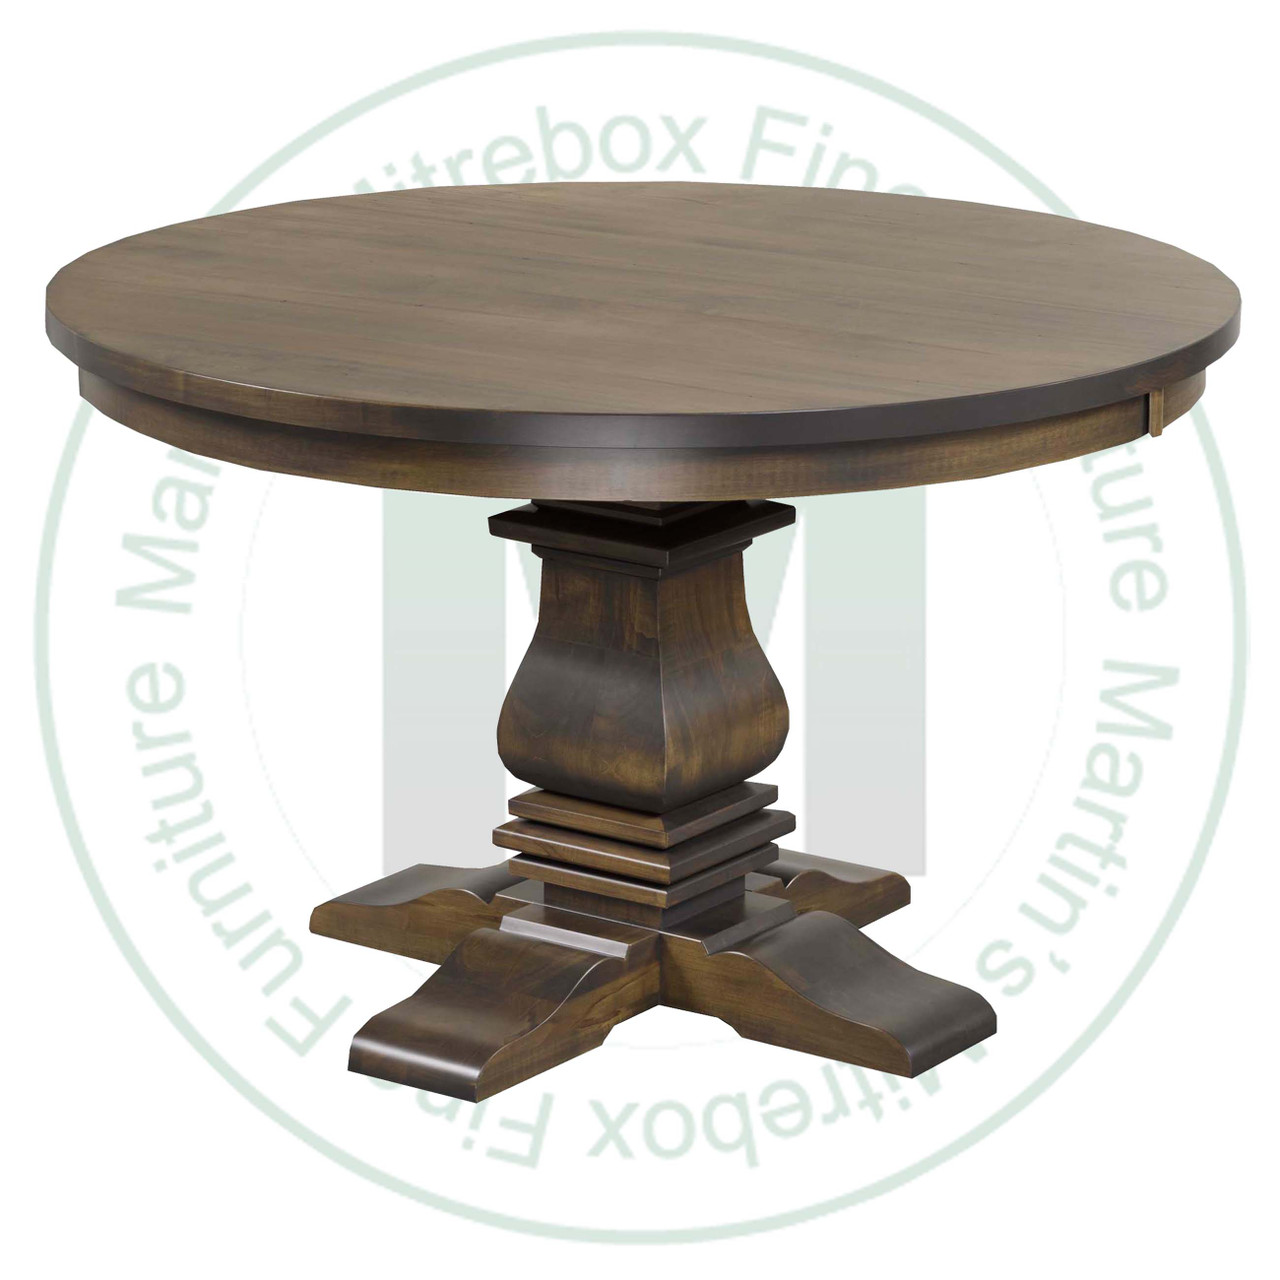 Oak Spartan Collection Single Pedestal Table 42''D x 54''W x 30''H. Table Has 1'' Thick Top